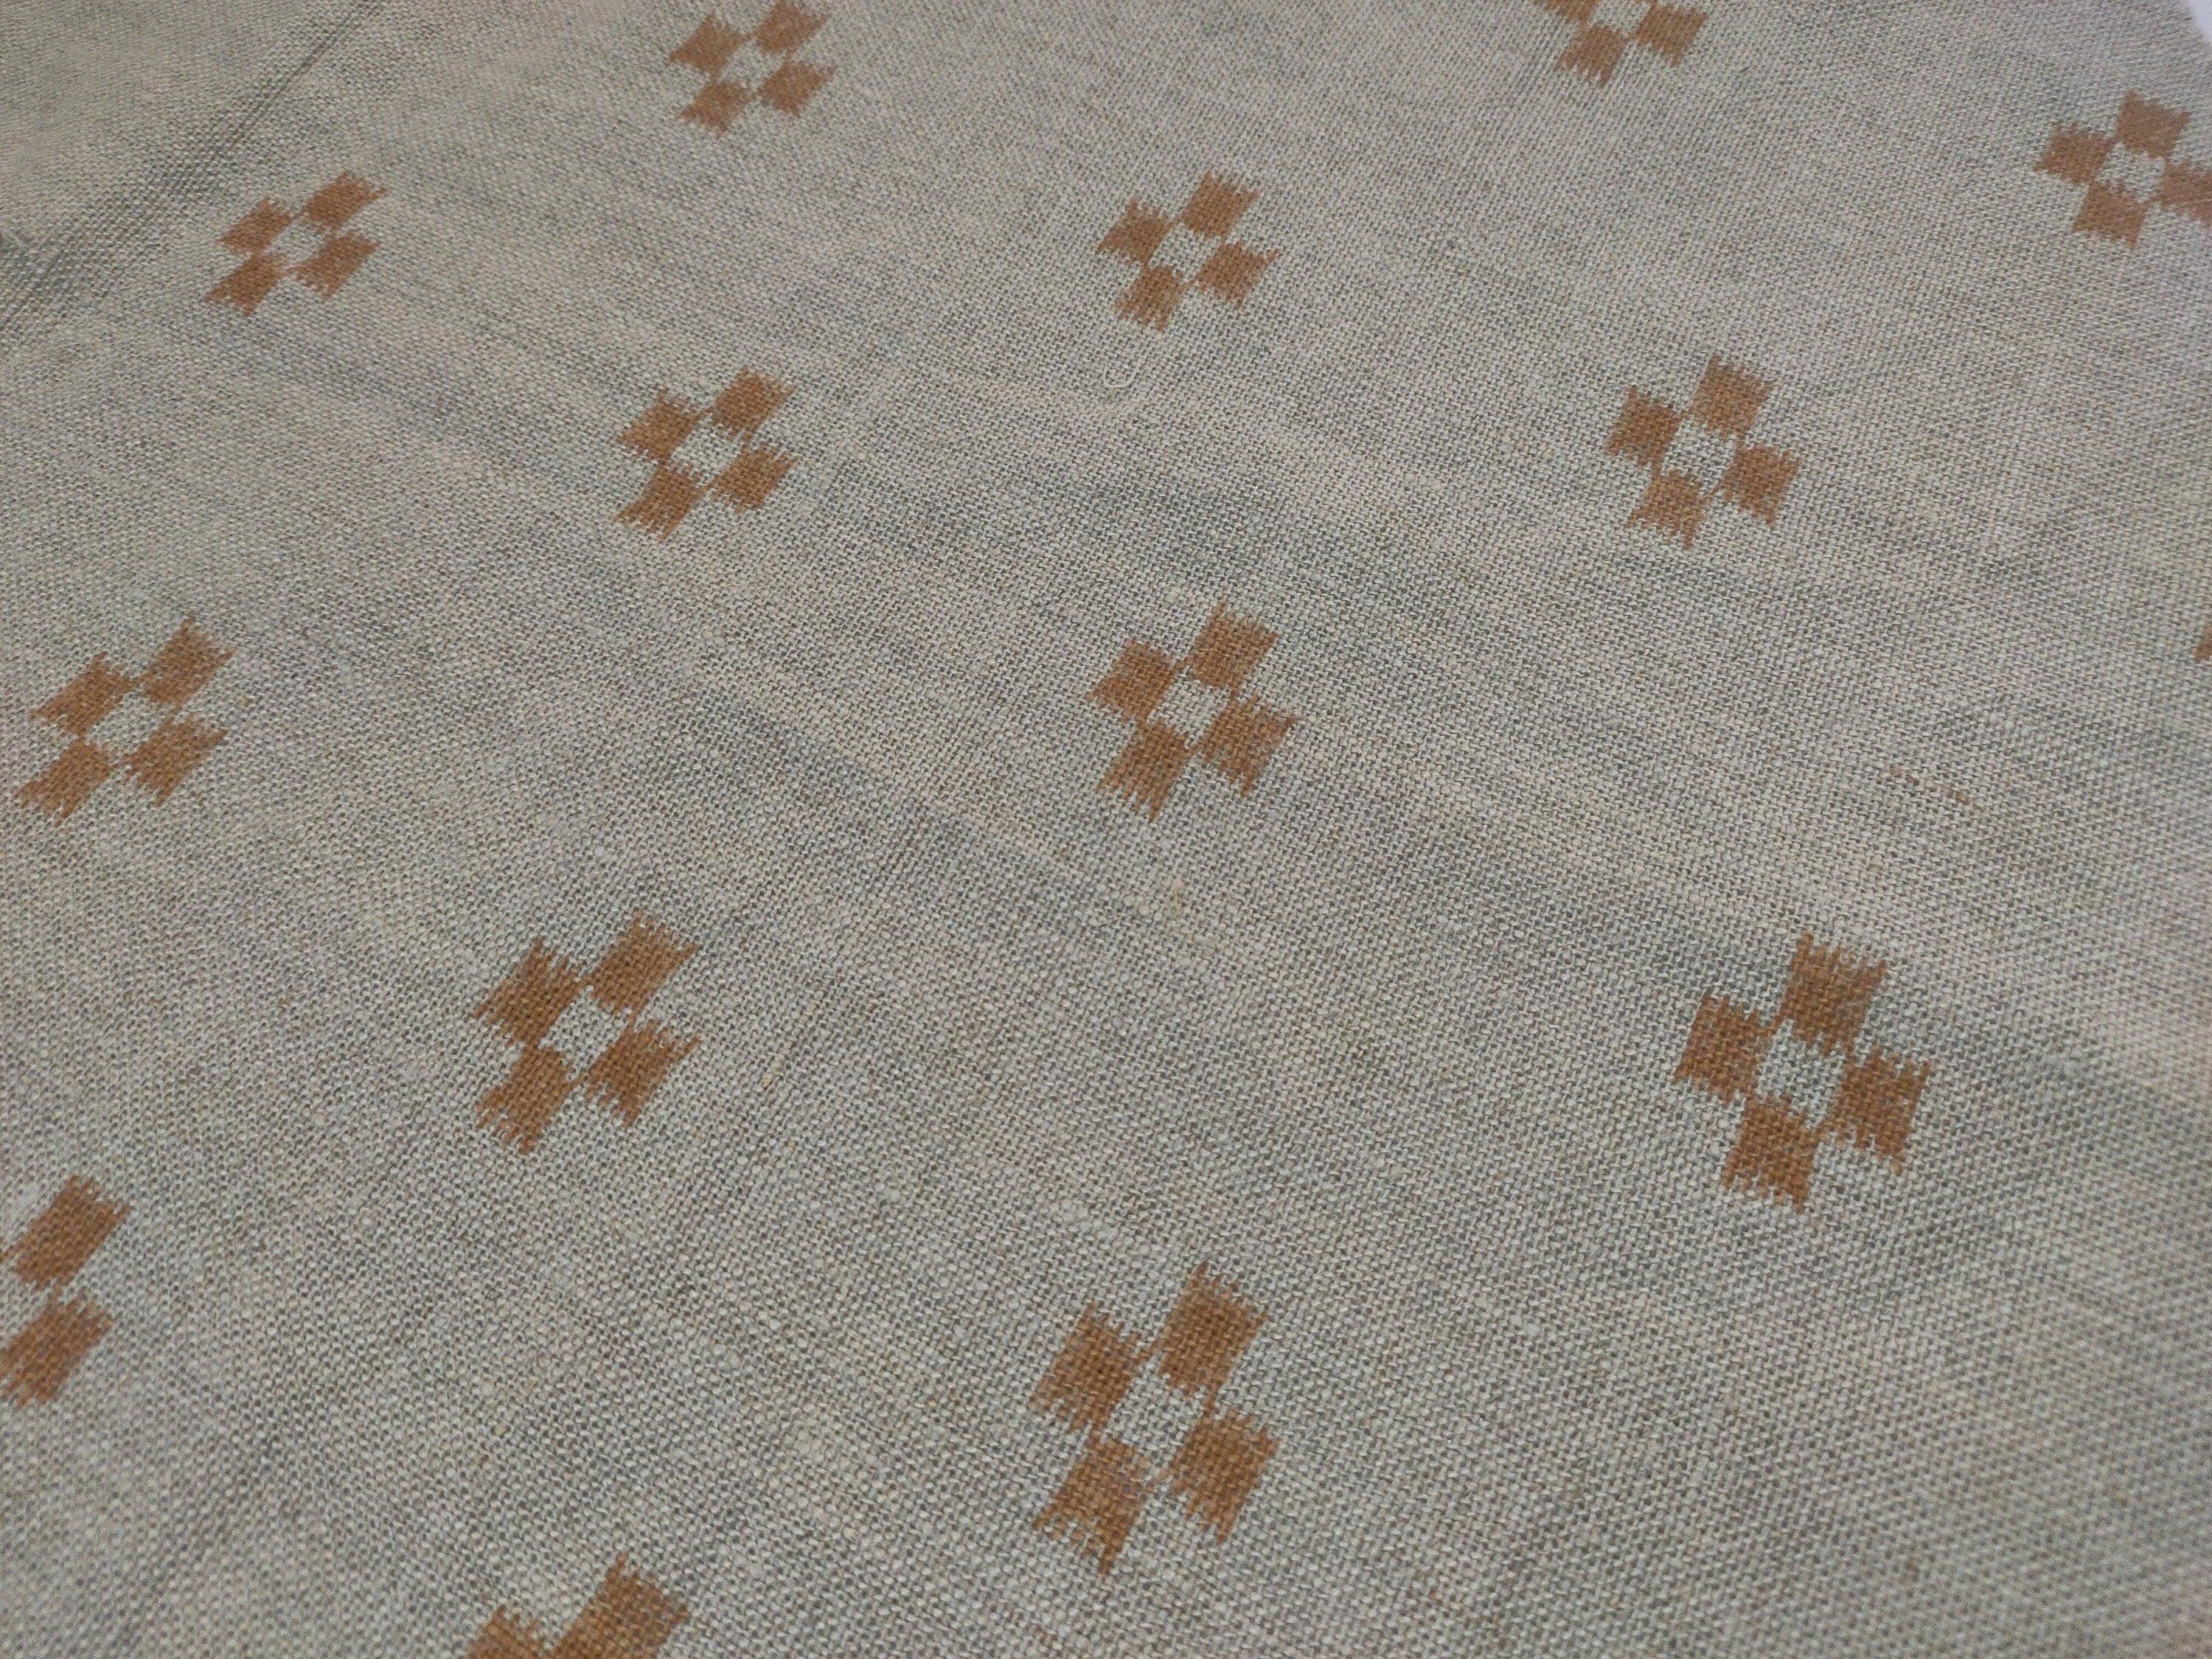 Barfi  Block Print Linen Fabric By The Yard, Grey Natural Vegetable Dye 100% Linen  Weight Fabric, Indian Fabric, Geometric Dots Print